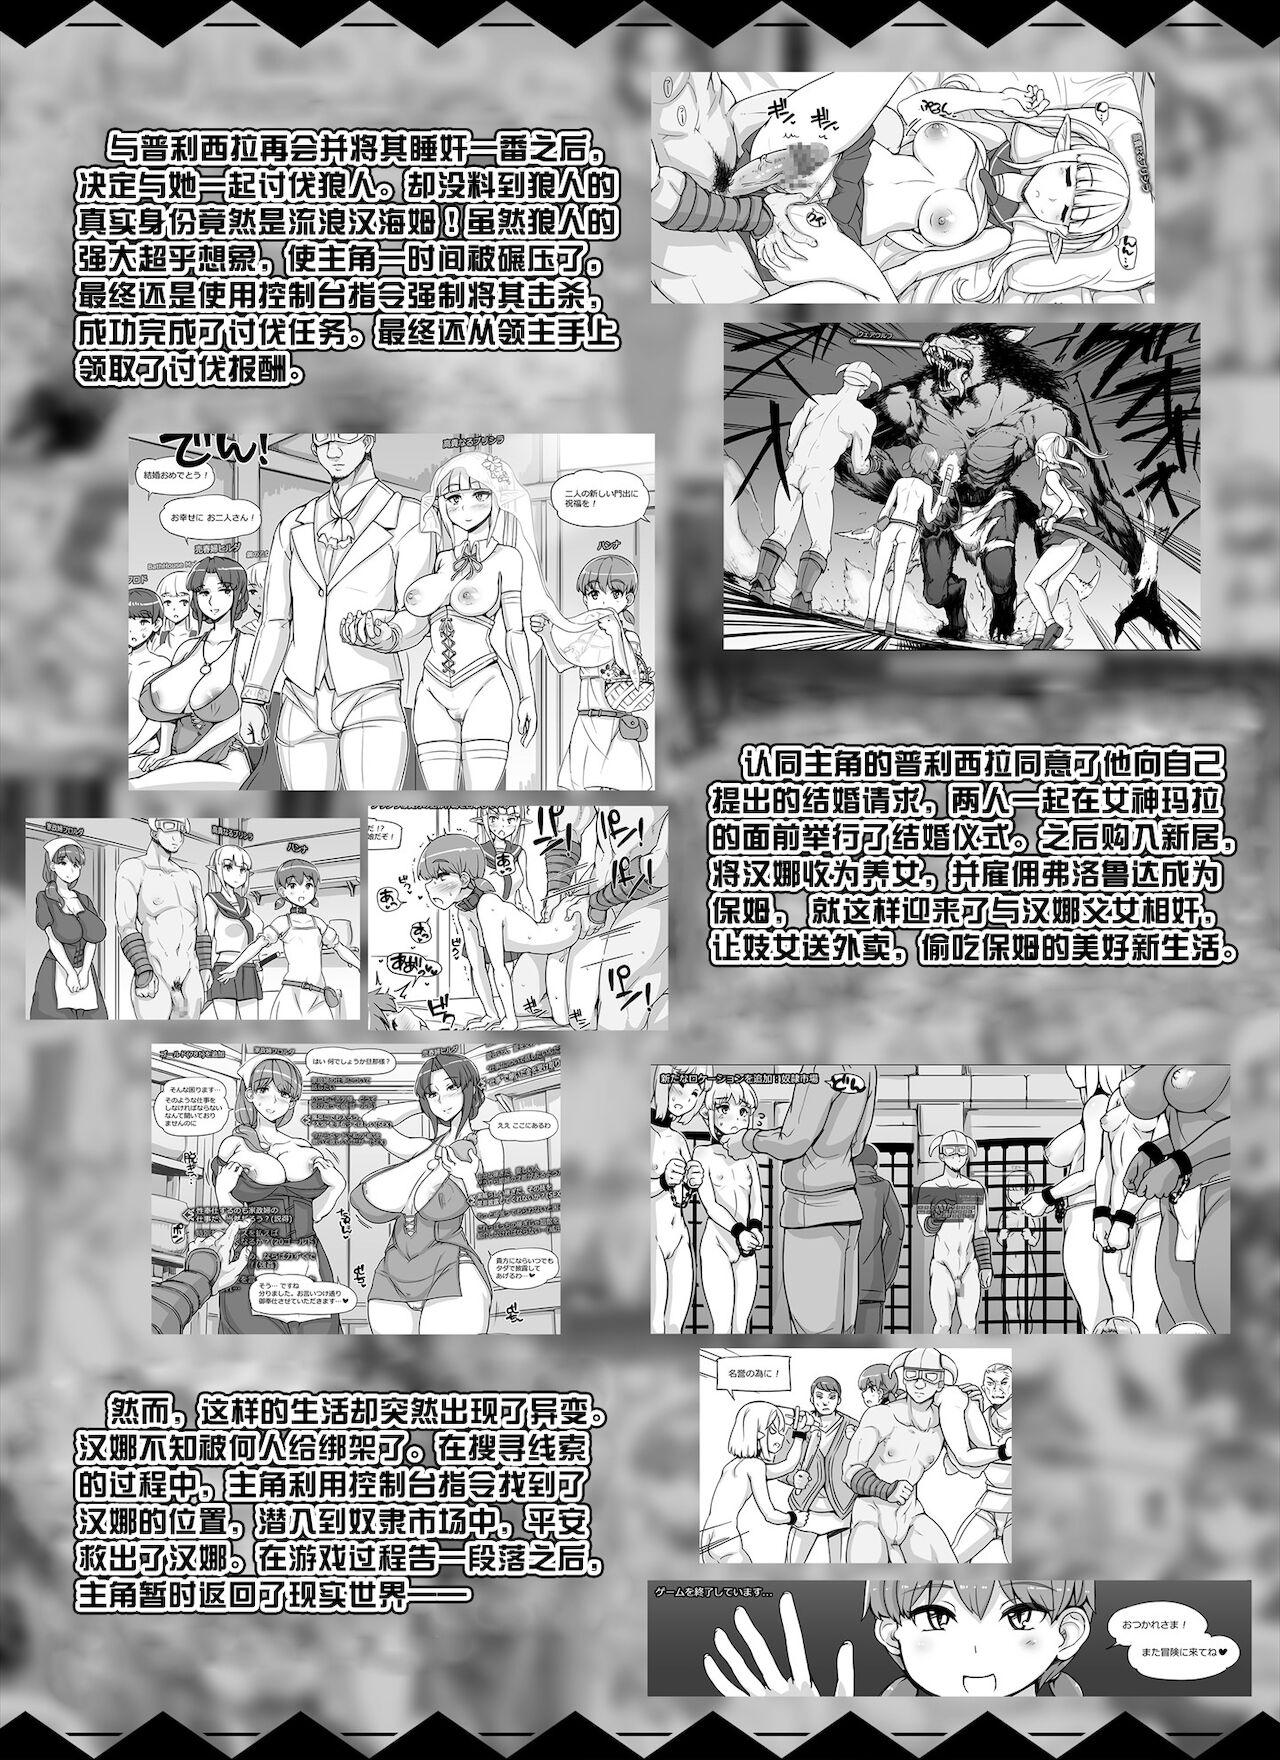 Mamadas NPC Kan MOD 2 - The elder scrolls Cartoon - Page 3